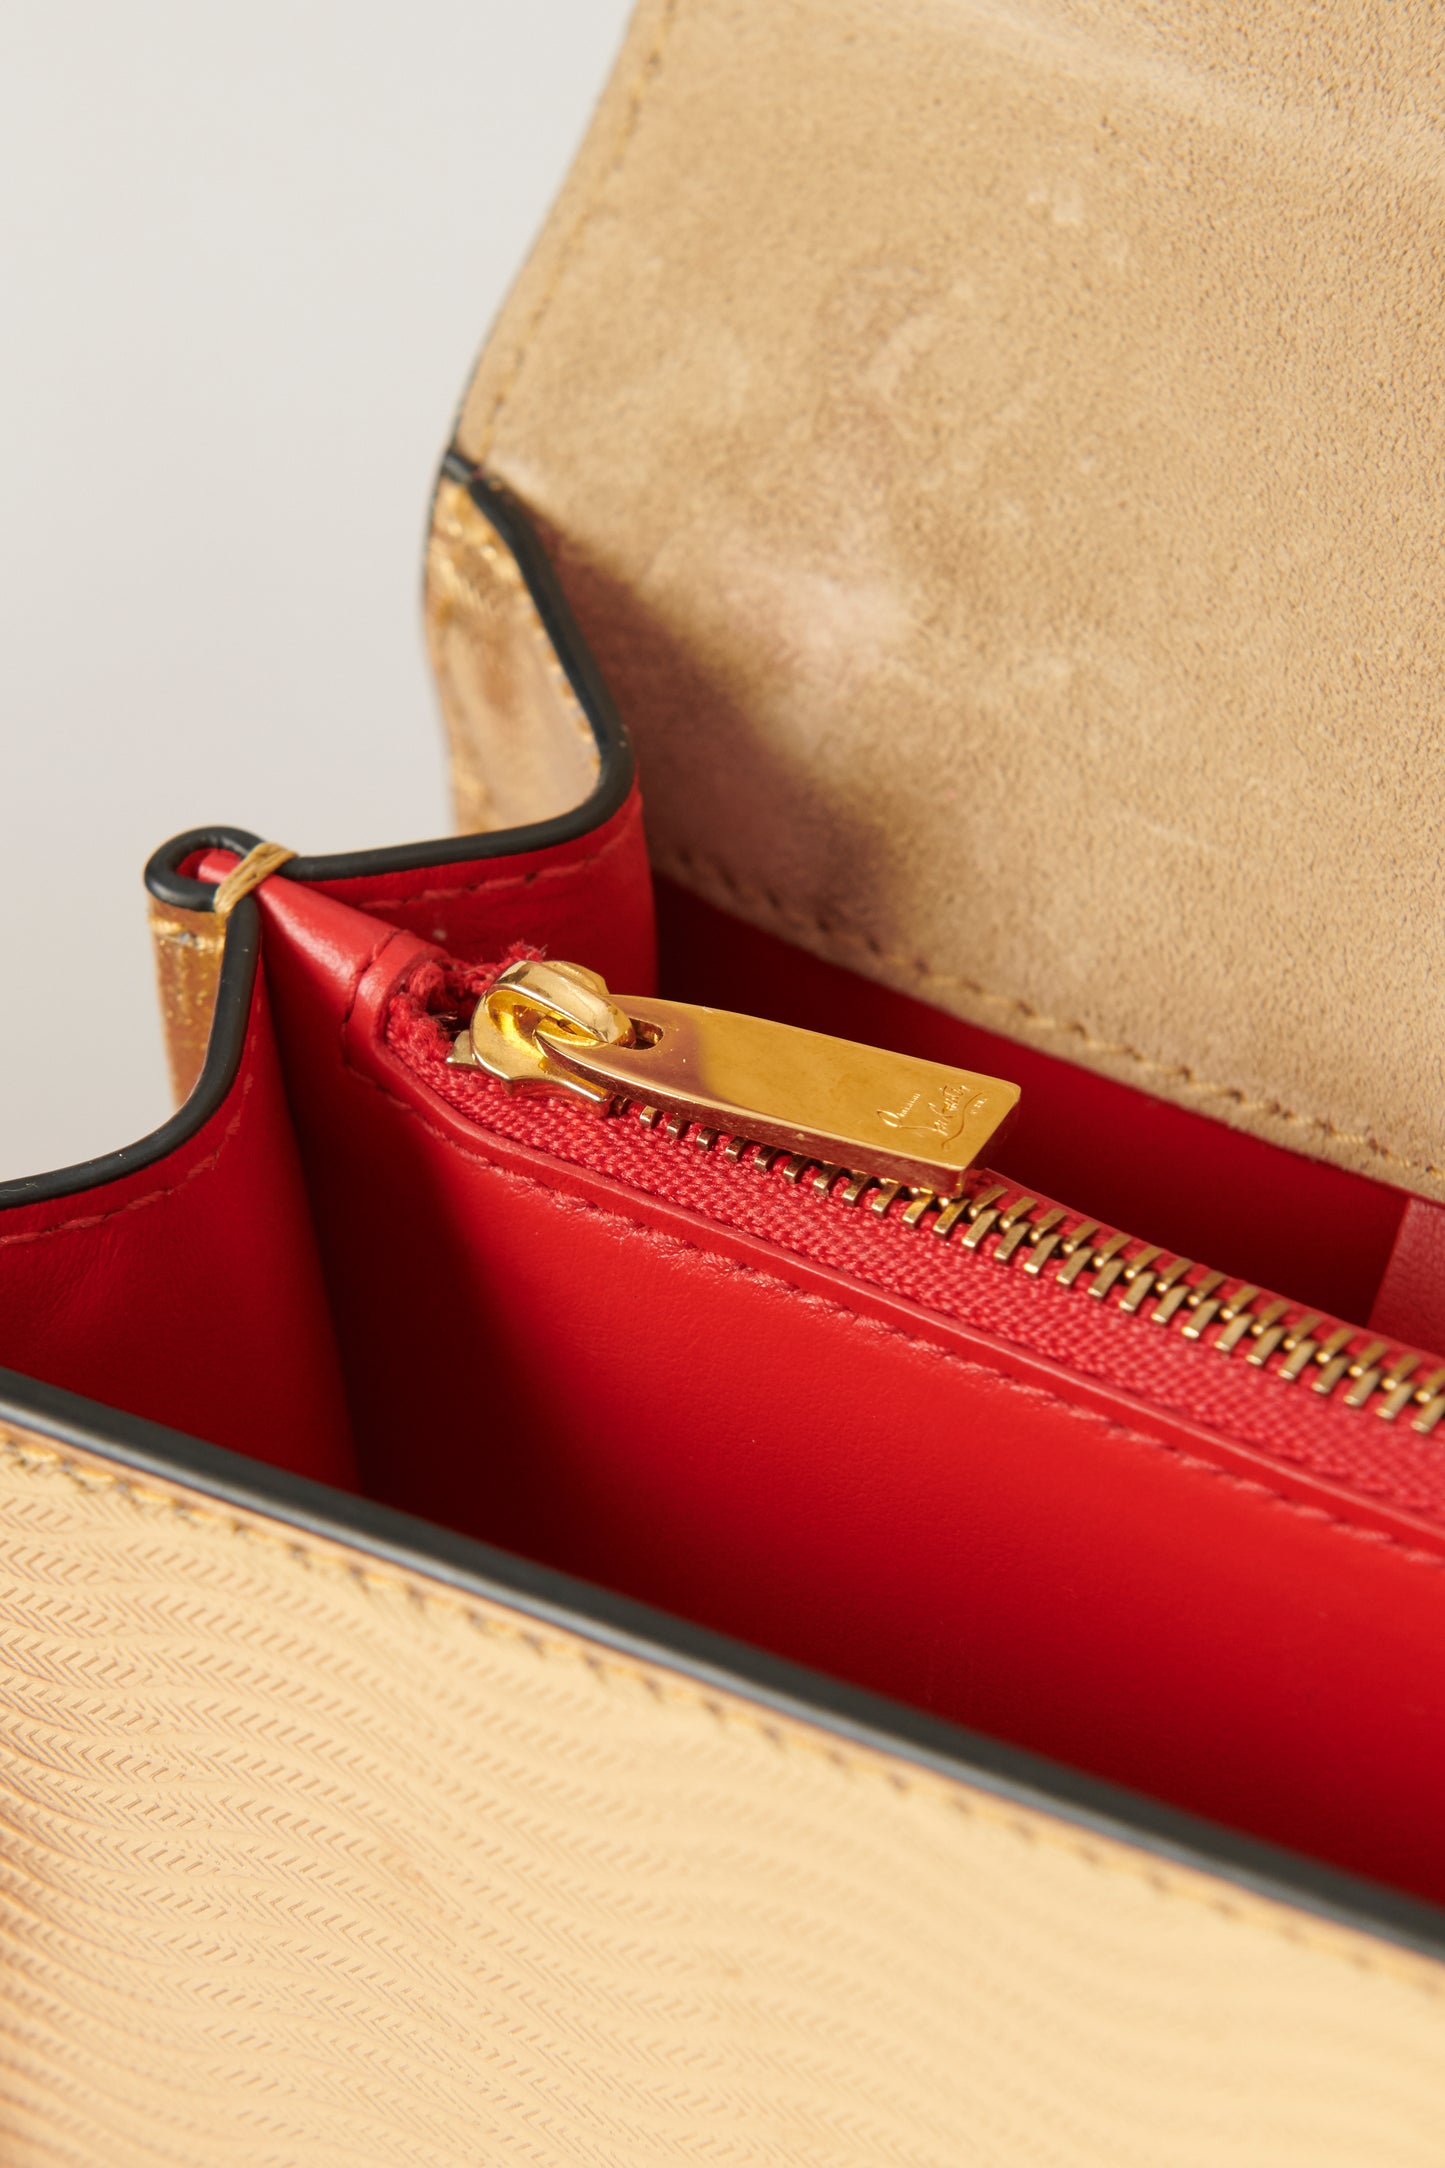 Gold Leather Elisa Mini Preowned Crossbody Bag